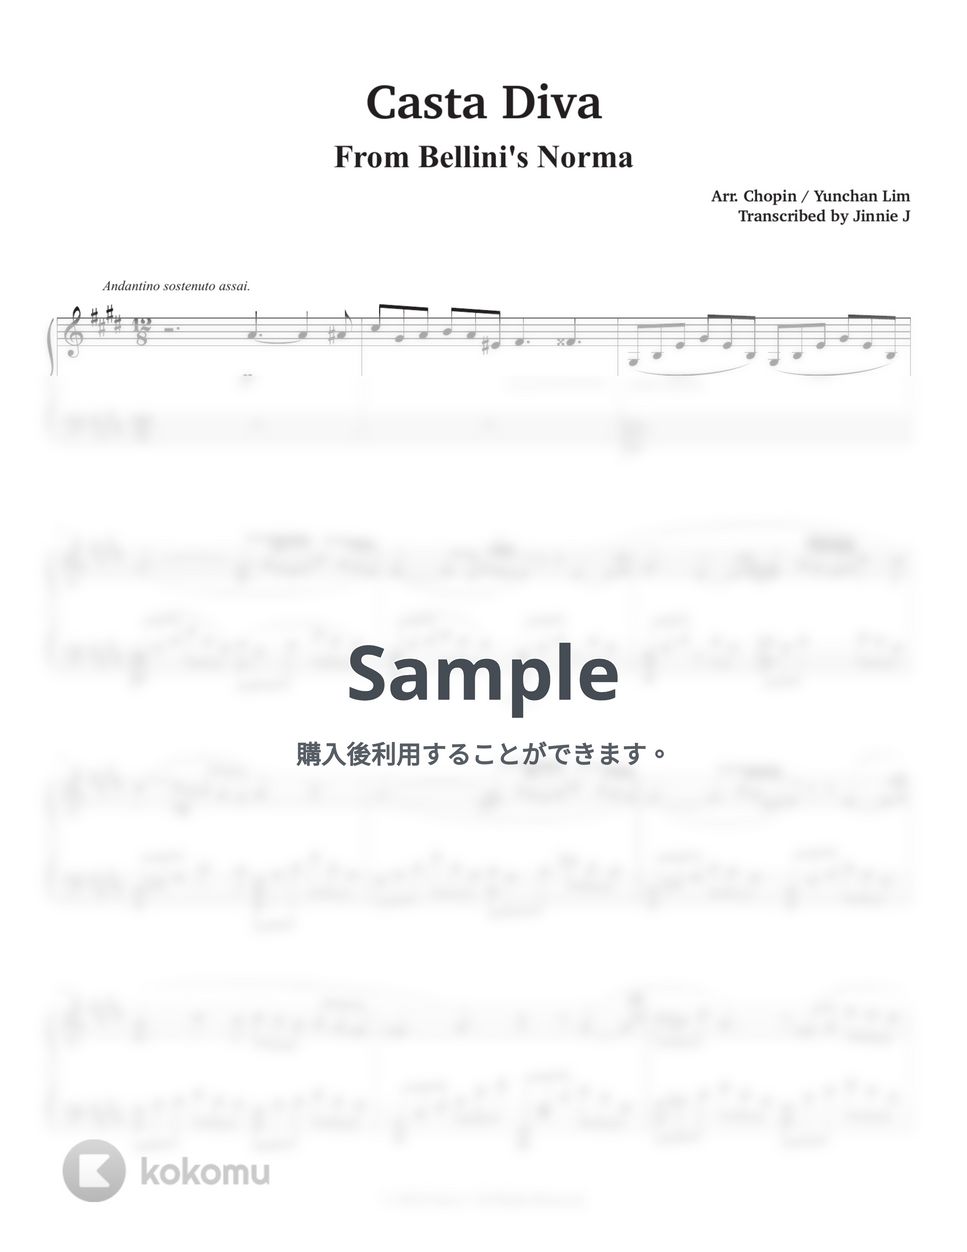 V. Bellini - Casta Diva (Norma) (Yunchan Lim Performance Transcription) by Jinnie J